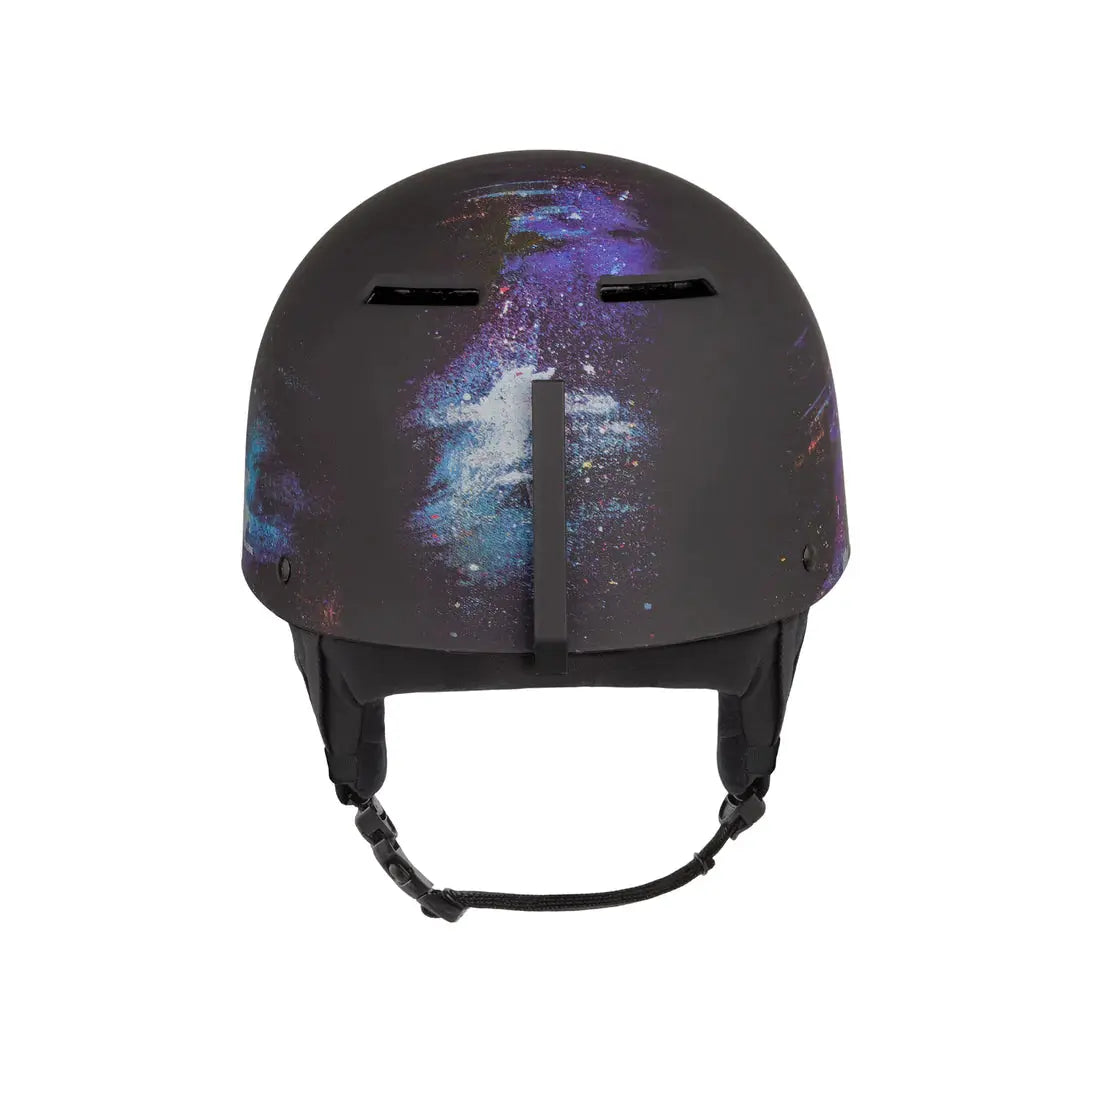 Sandbox Classic 2.0 Snow Helmet - Mr Jago SANDBOX